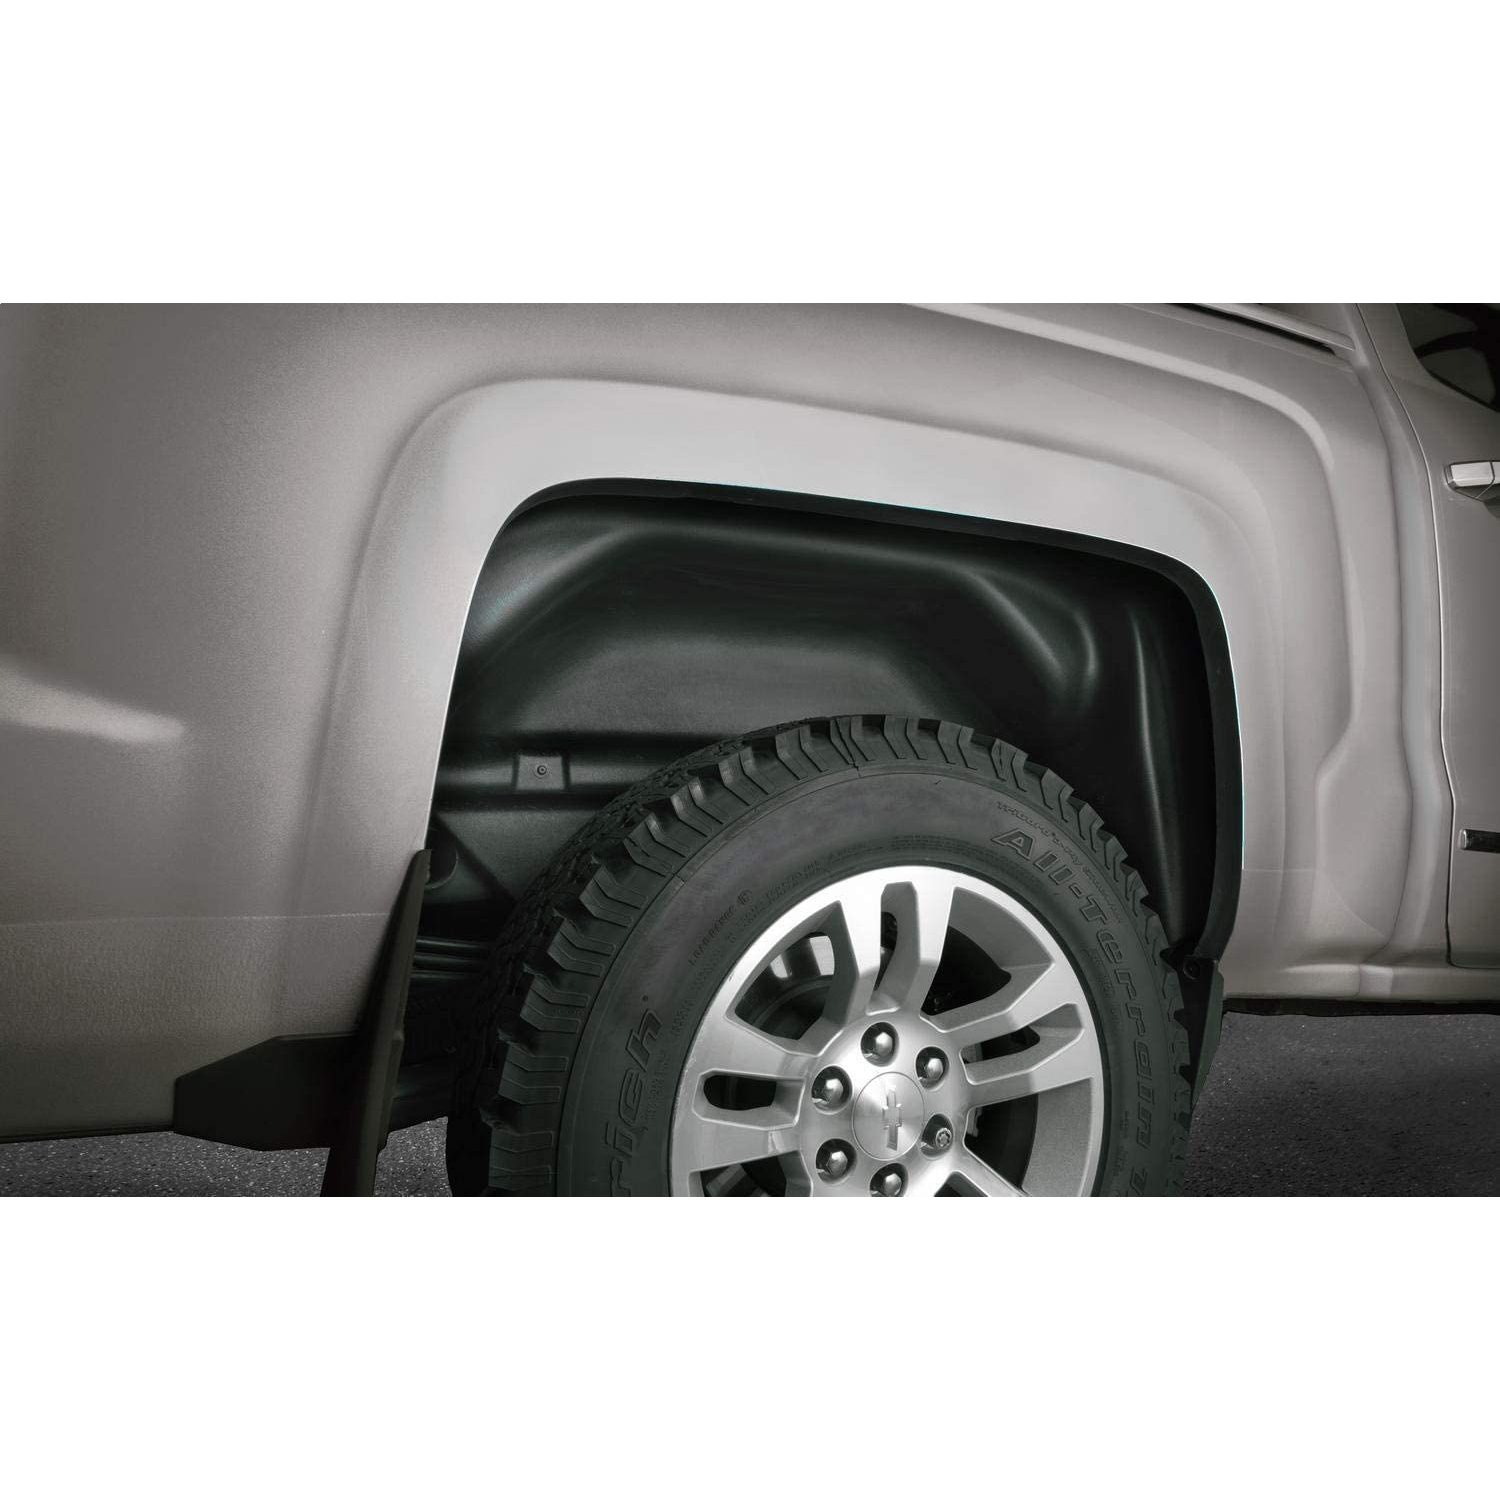 Husky Liners 79061 Rear Wheel Well Guards for 2019 2020 Chevrolet Silverado 1500 753933790615 | eBay 2020 Chevy 2500hd Rear Wheel Well Liner